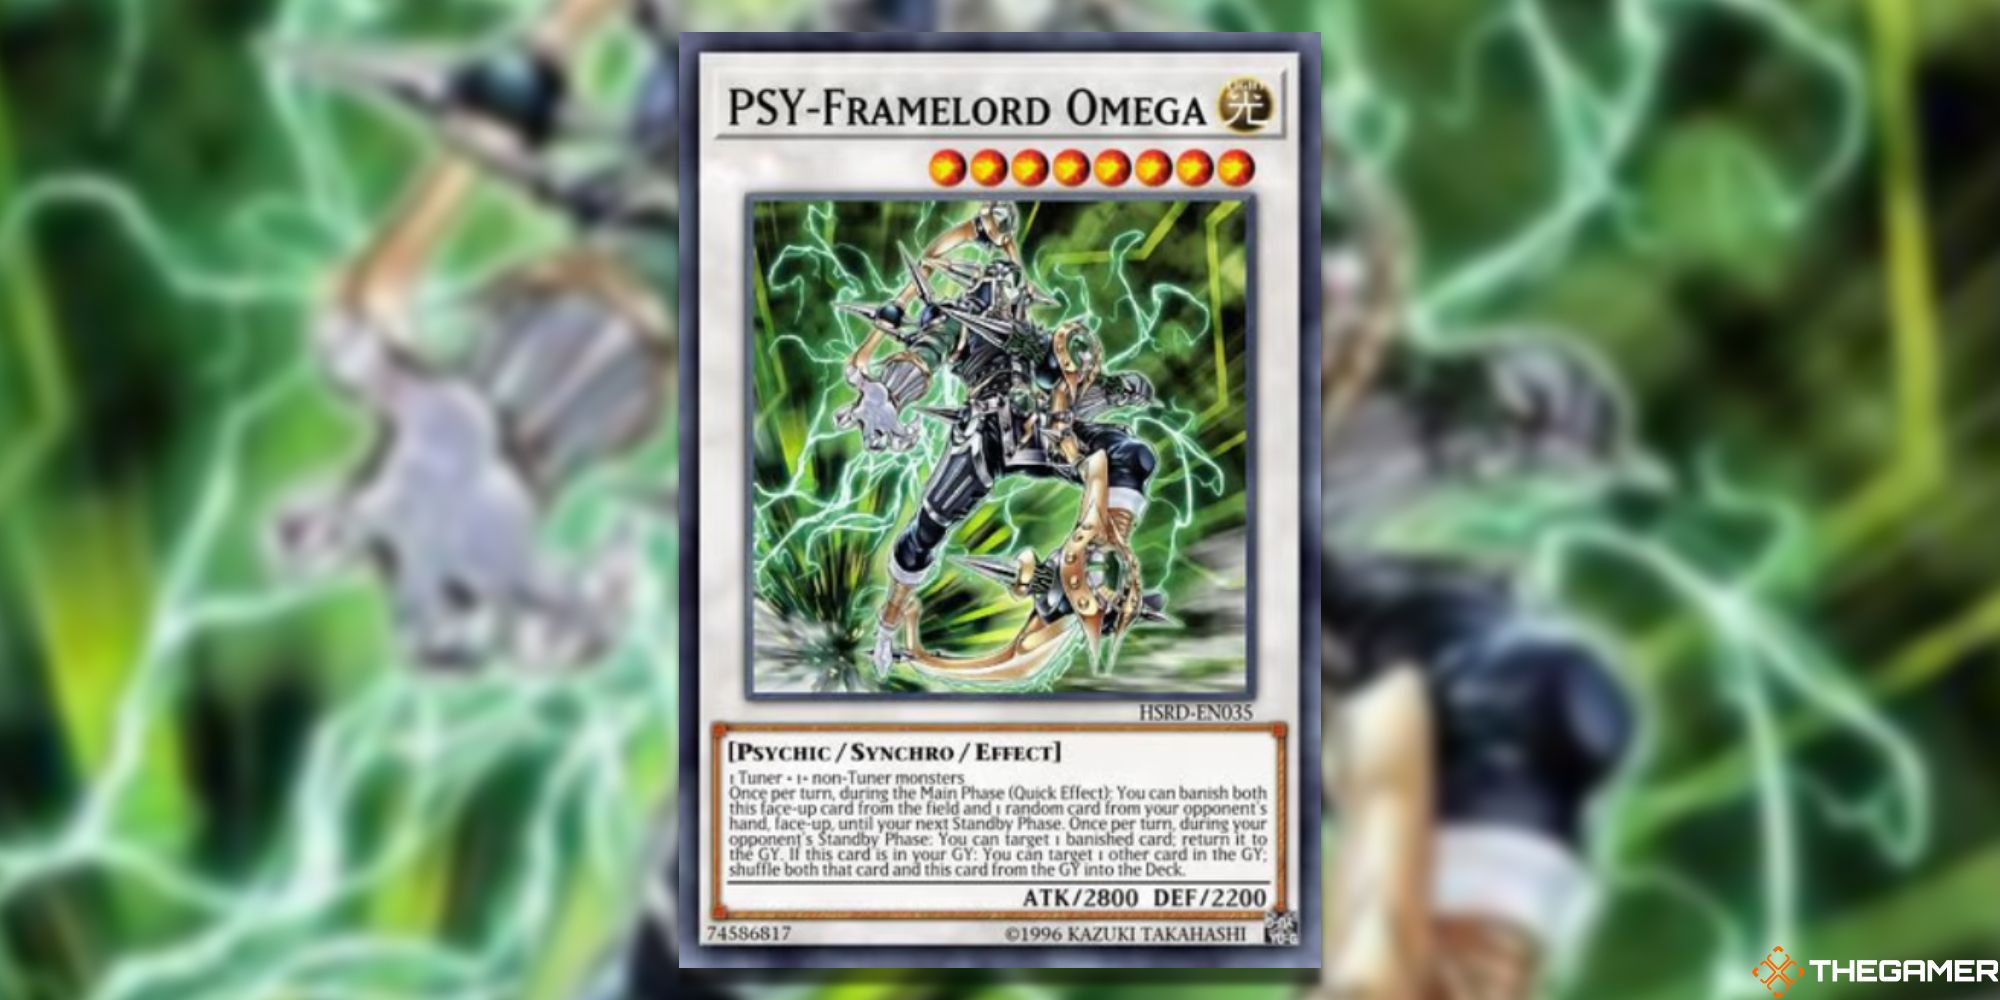 Yu-Gi-Oh! PSY-Framelord Omega on blurred background